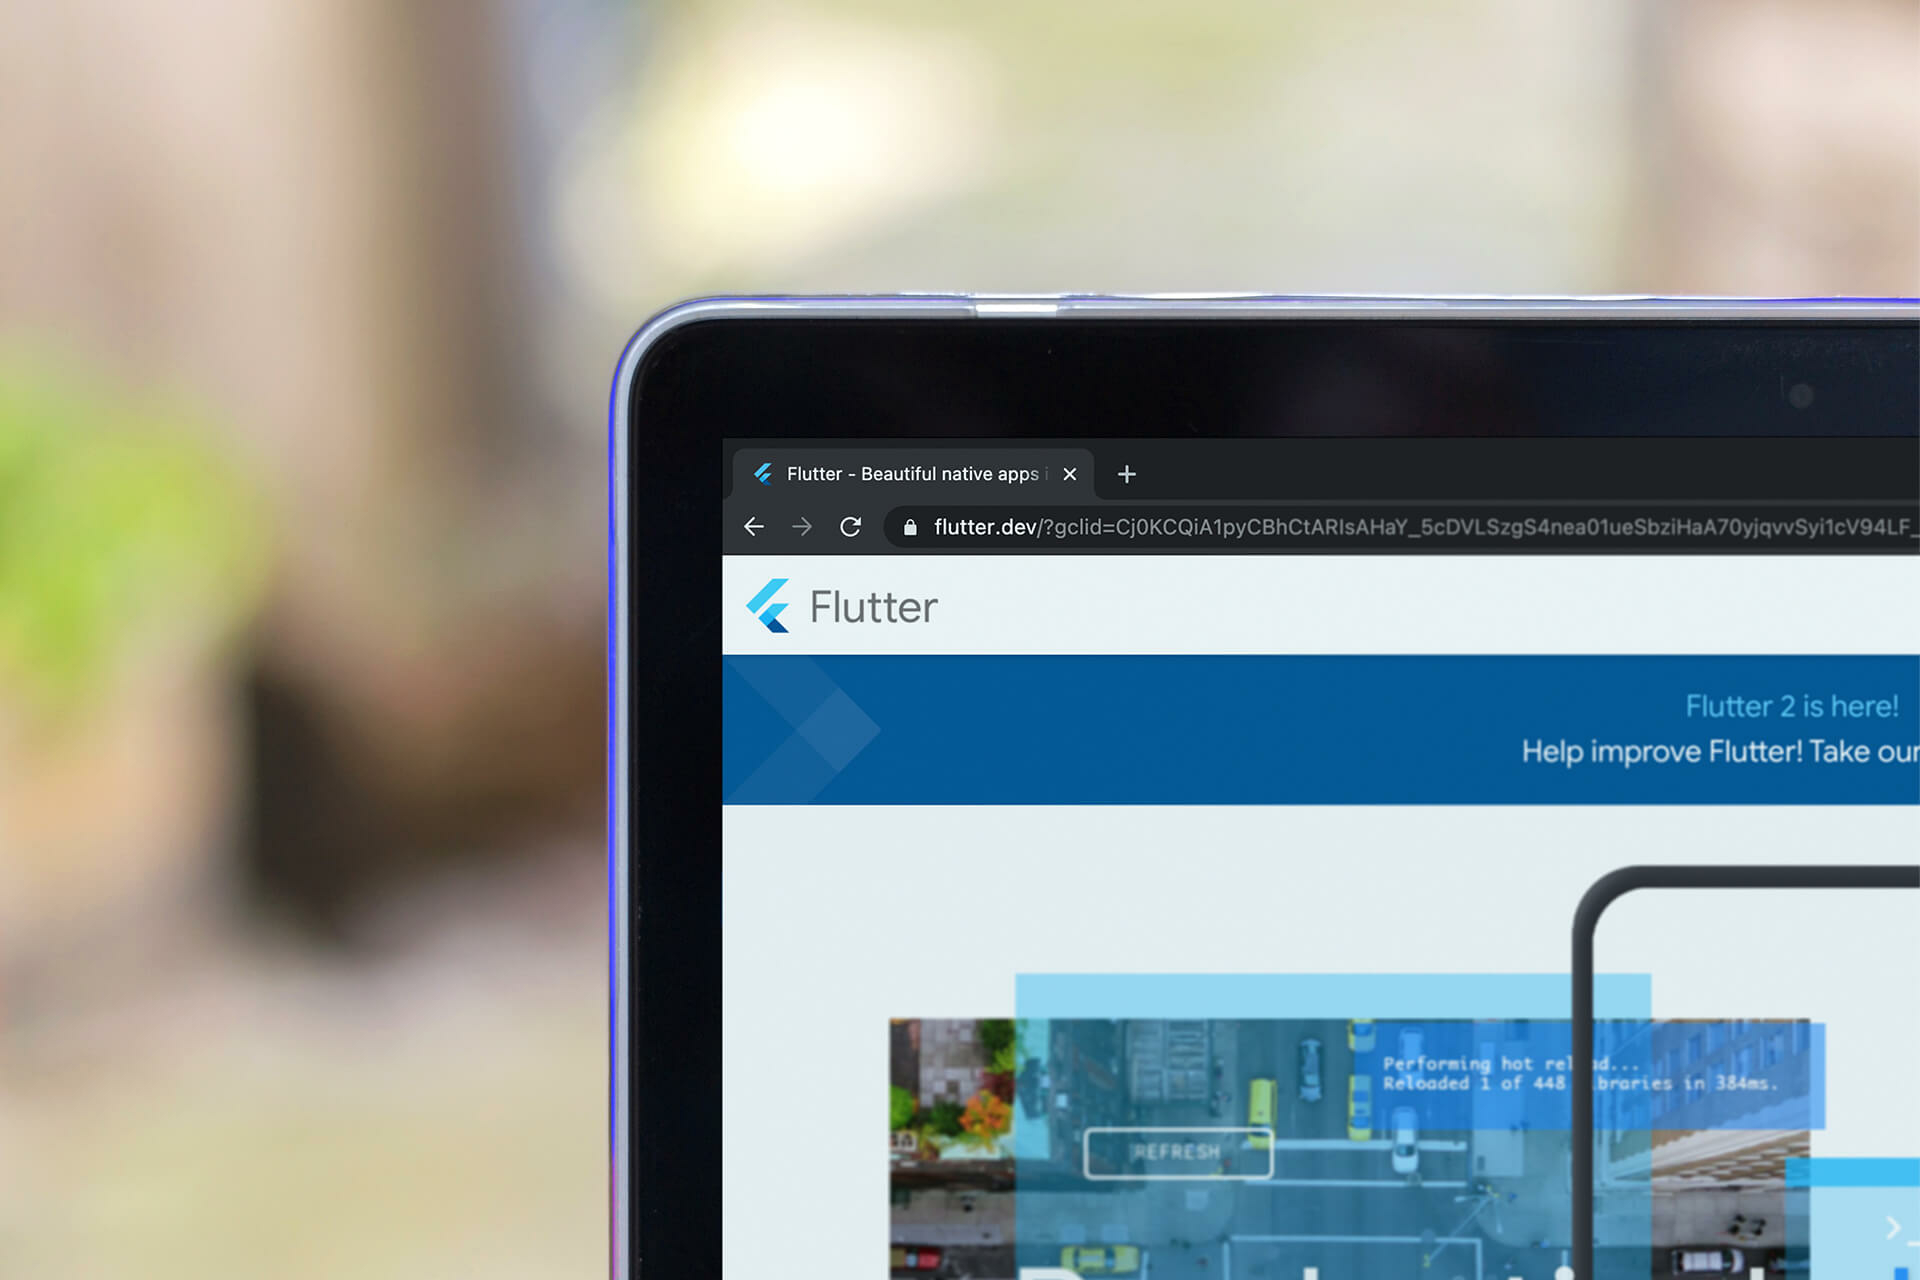 Flutter 2.0 update relesead